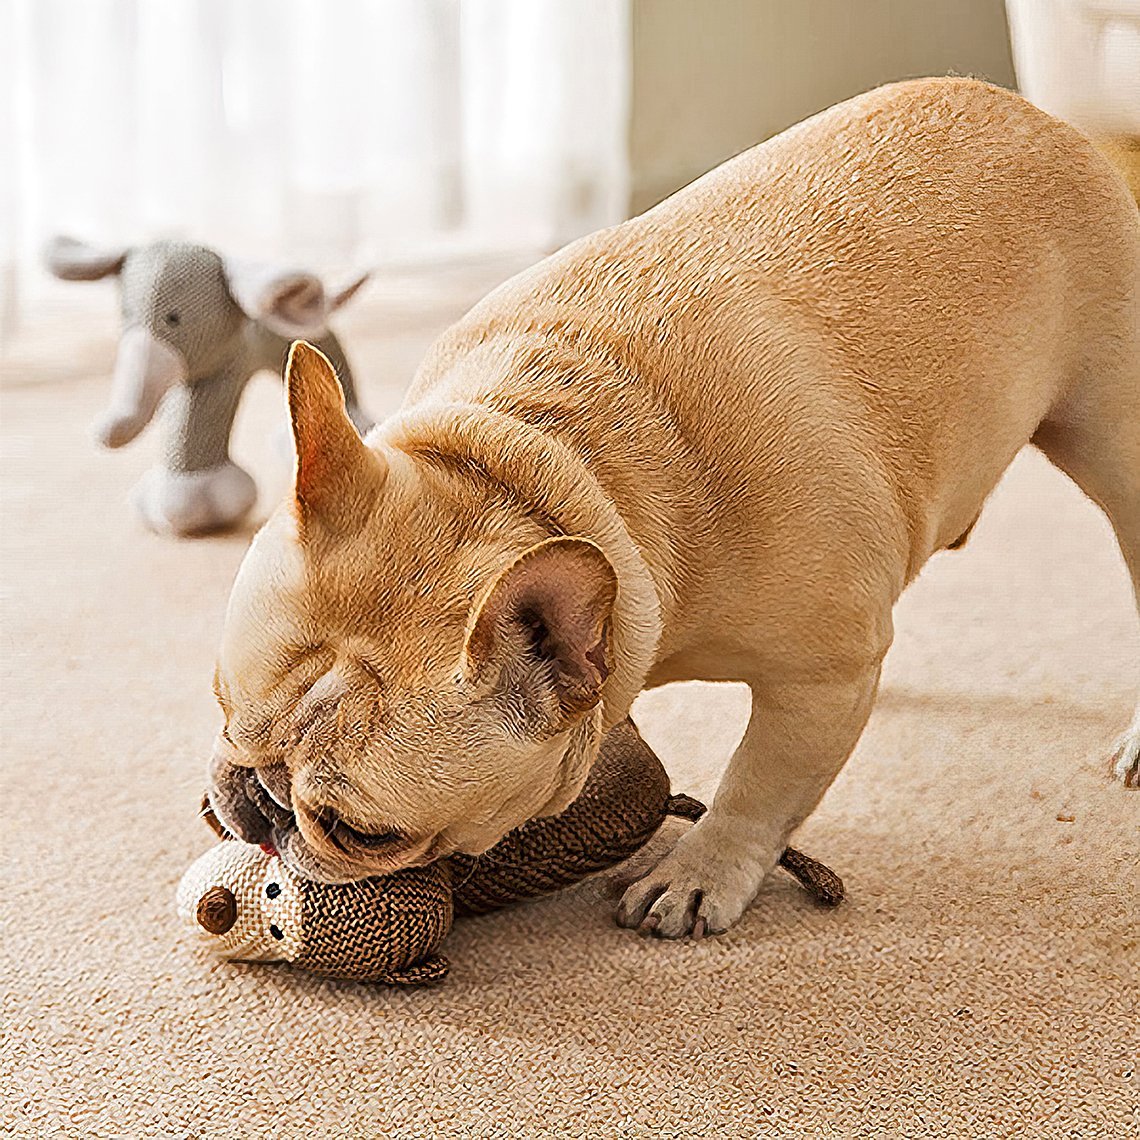 A pug biting a monkey dog toy on the floor.